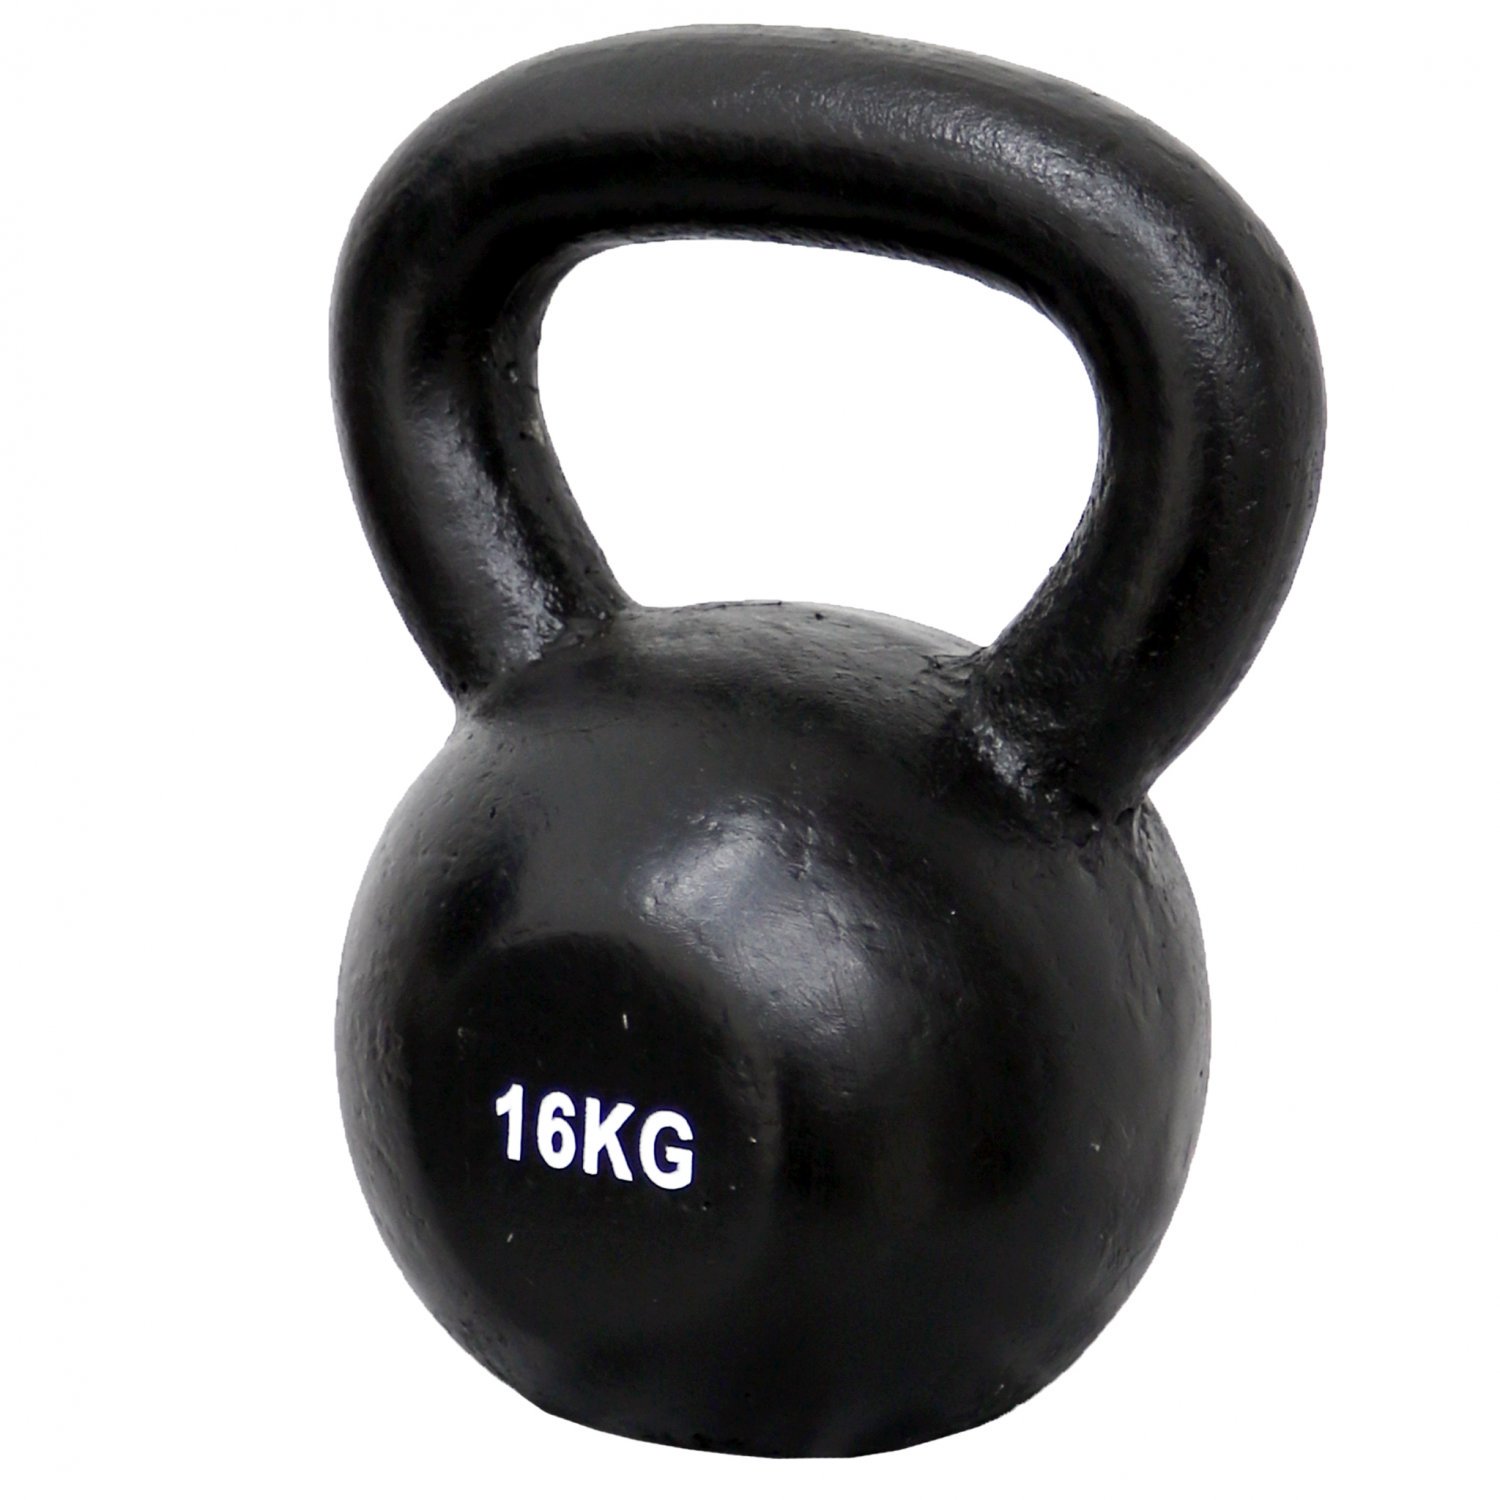 16kg Cast Iron Kettlebell Weight Training Fitness Workout Gym